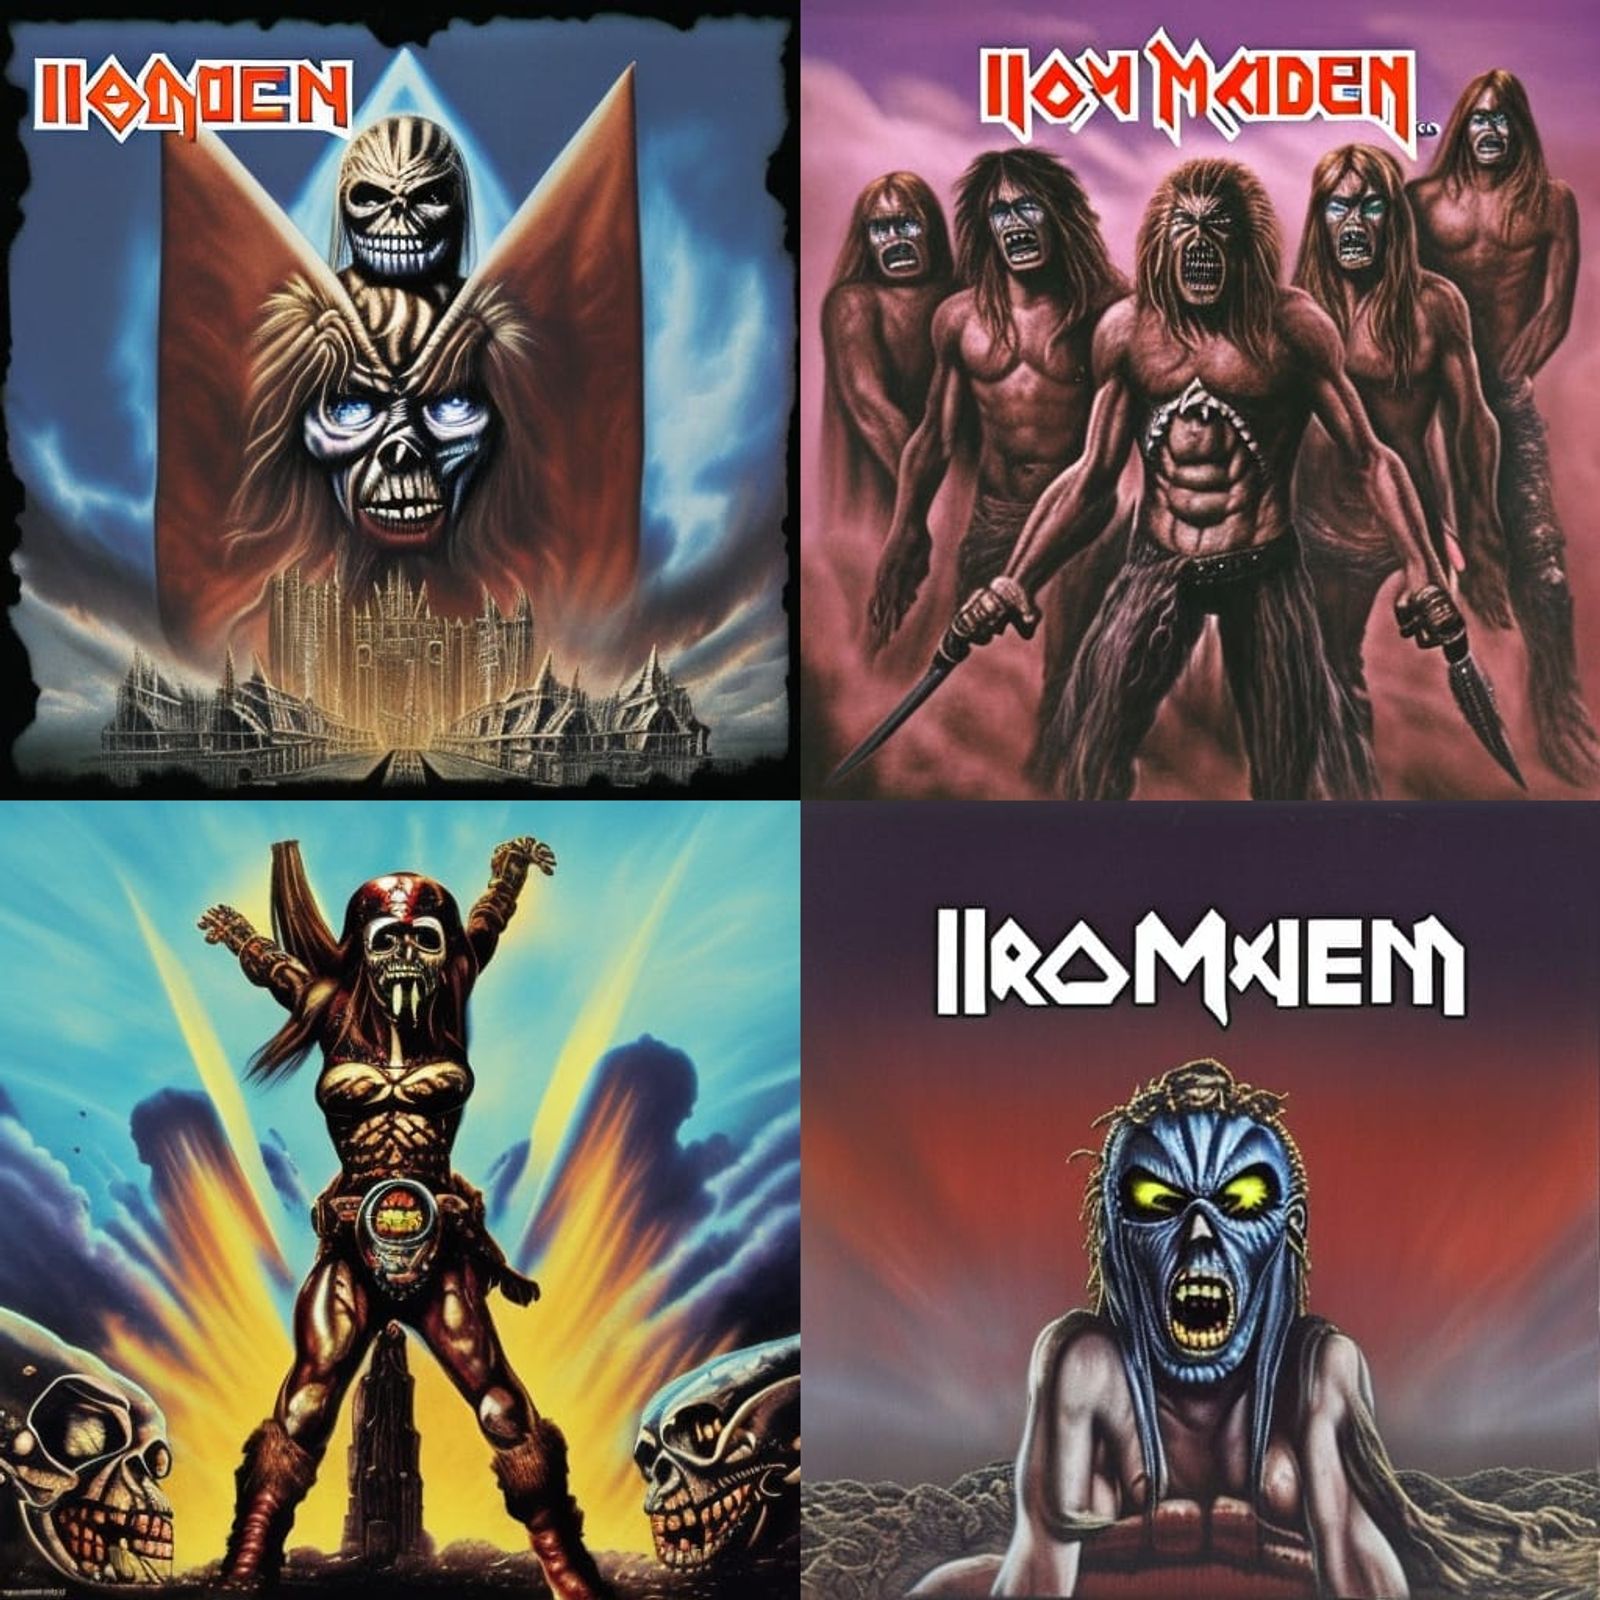 iron maiden album covers wallpaper